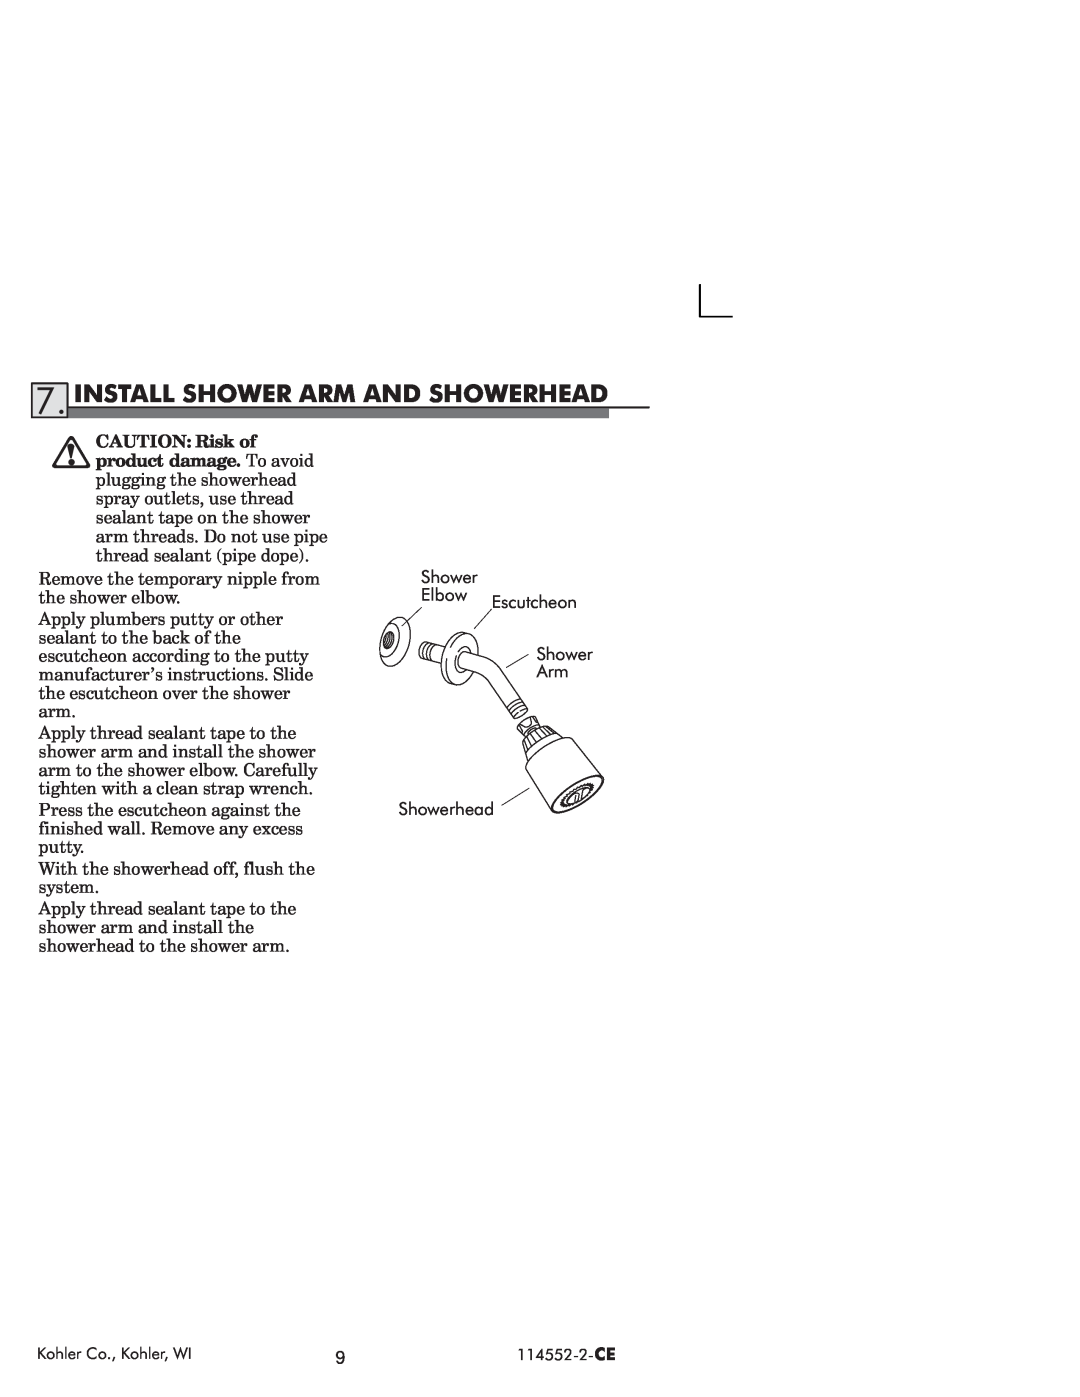 Kohler 114522-2-CE manual Install Shower Arm And Showerhead 